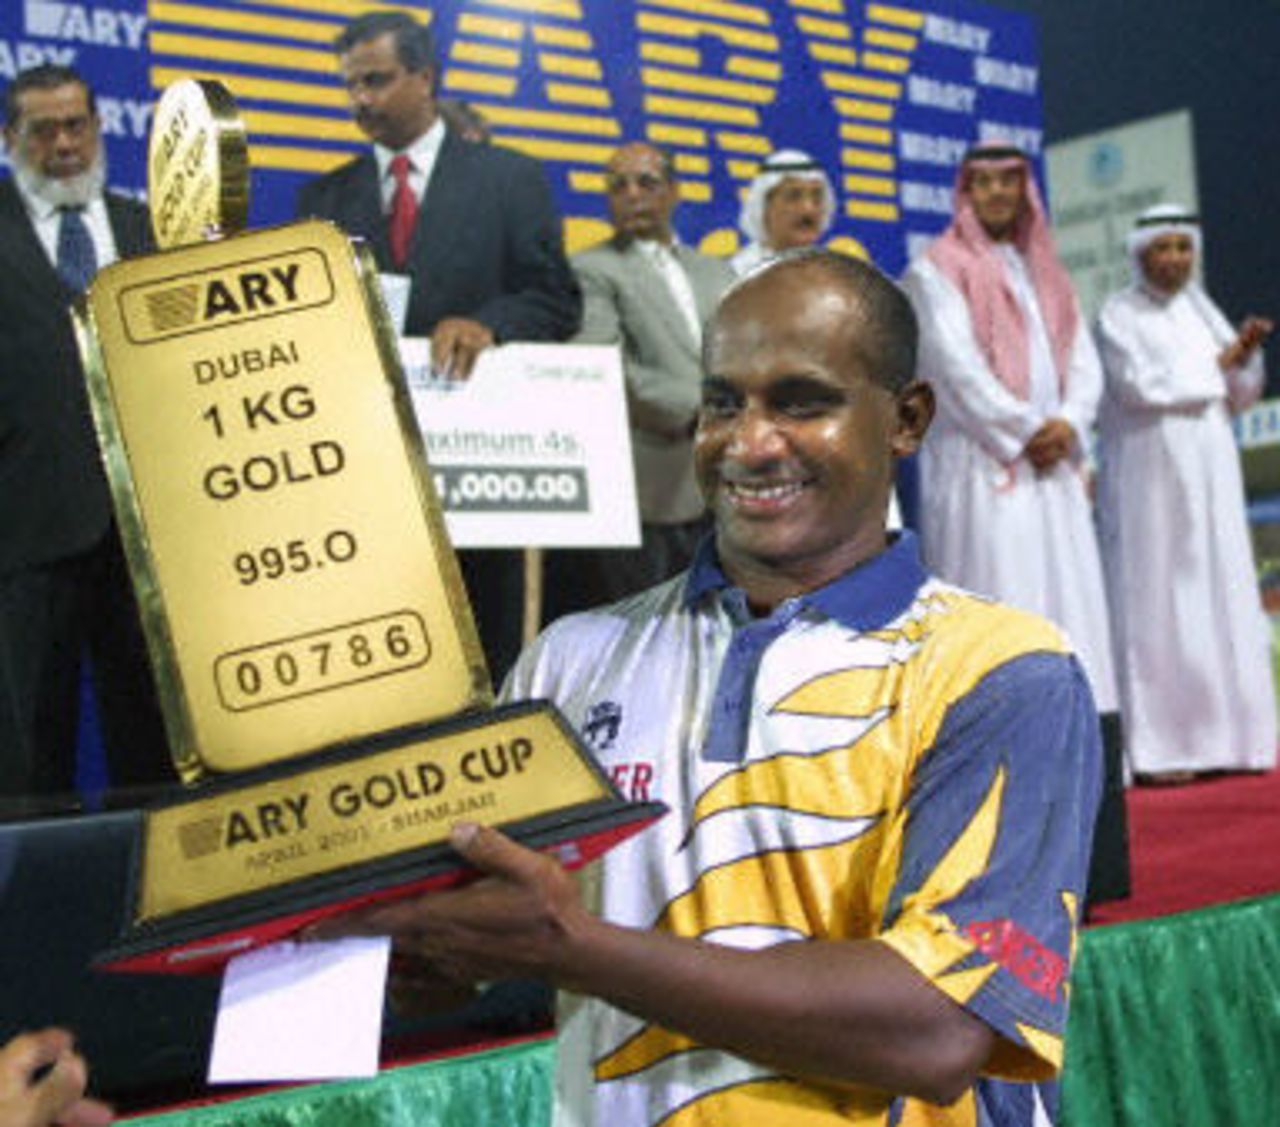 Sanath Jayasuriya receiving the ARY Gold Cup, Final at Sharjah, Pakistan v Sri Lanka, 20 April 2001